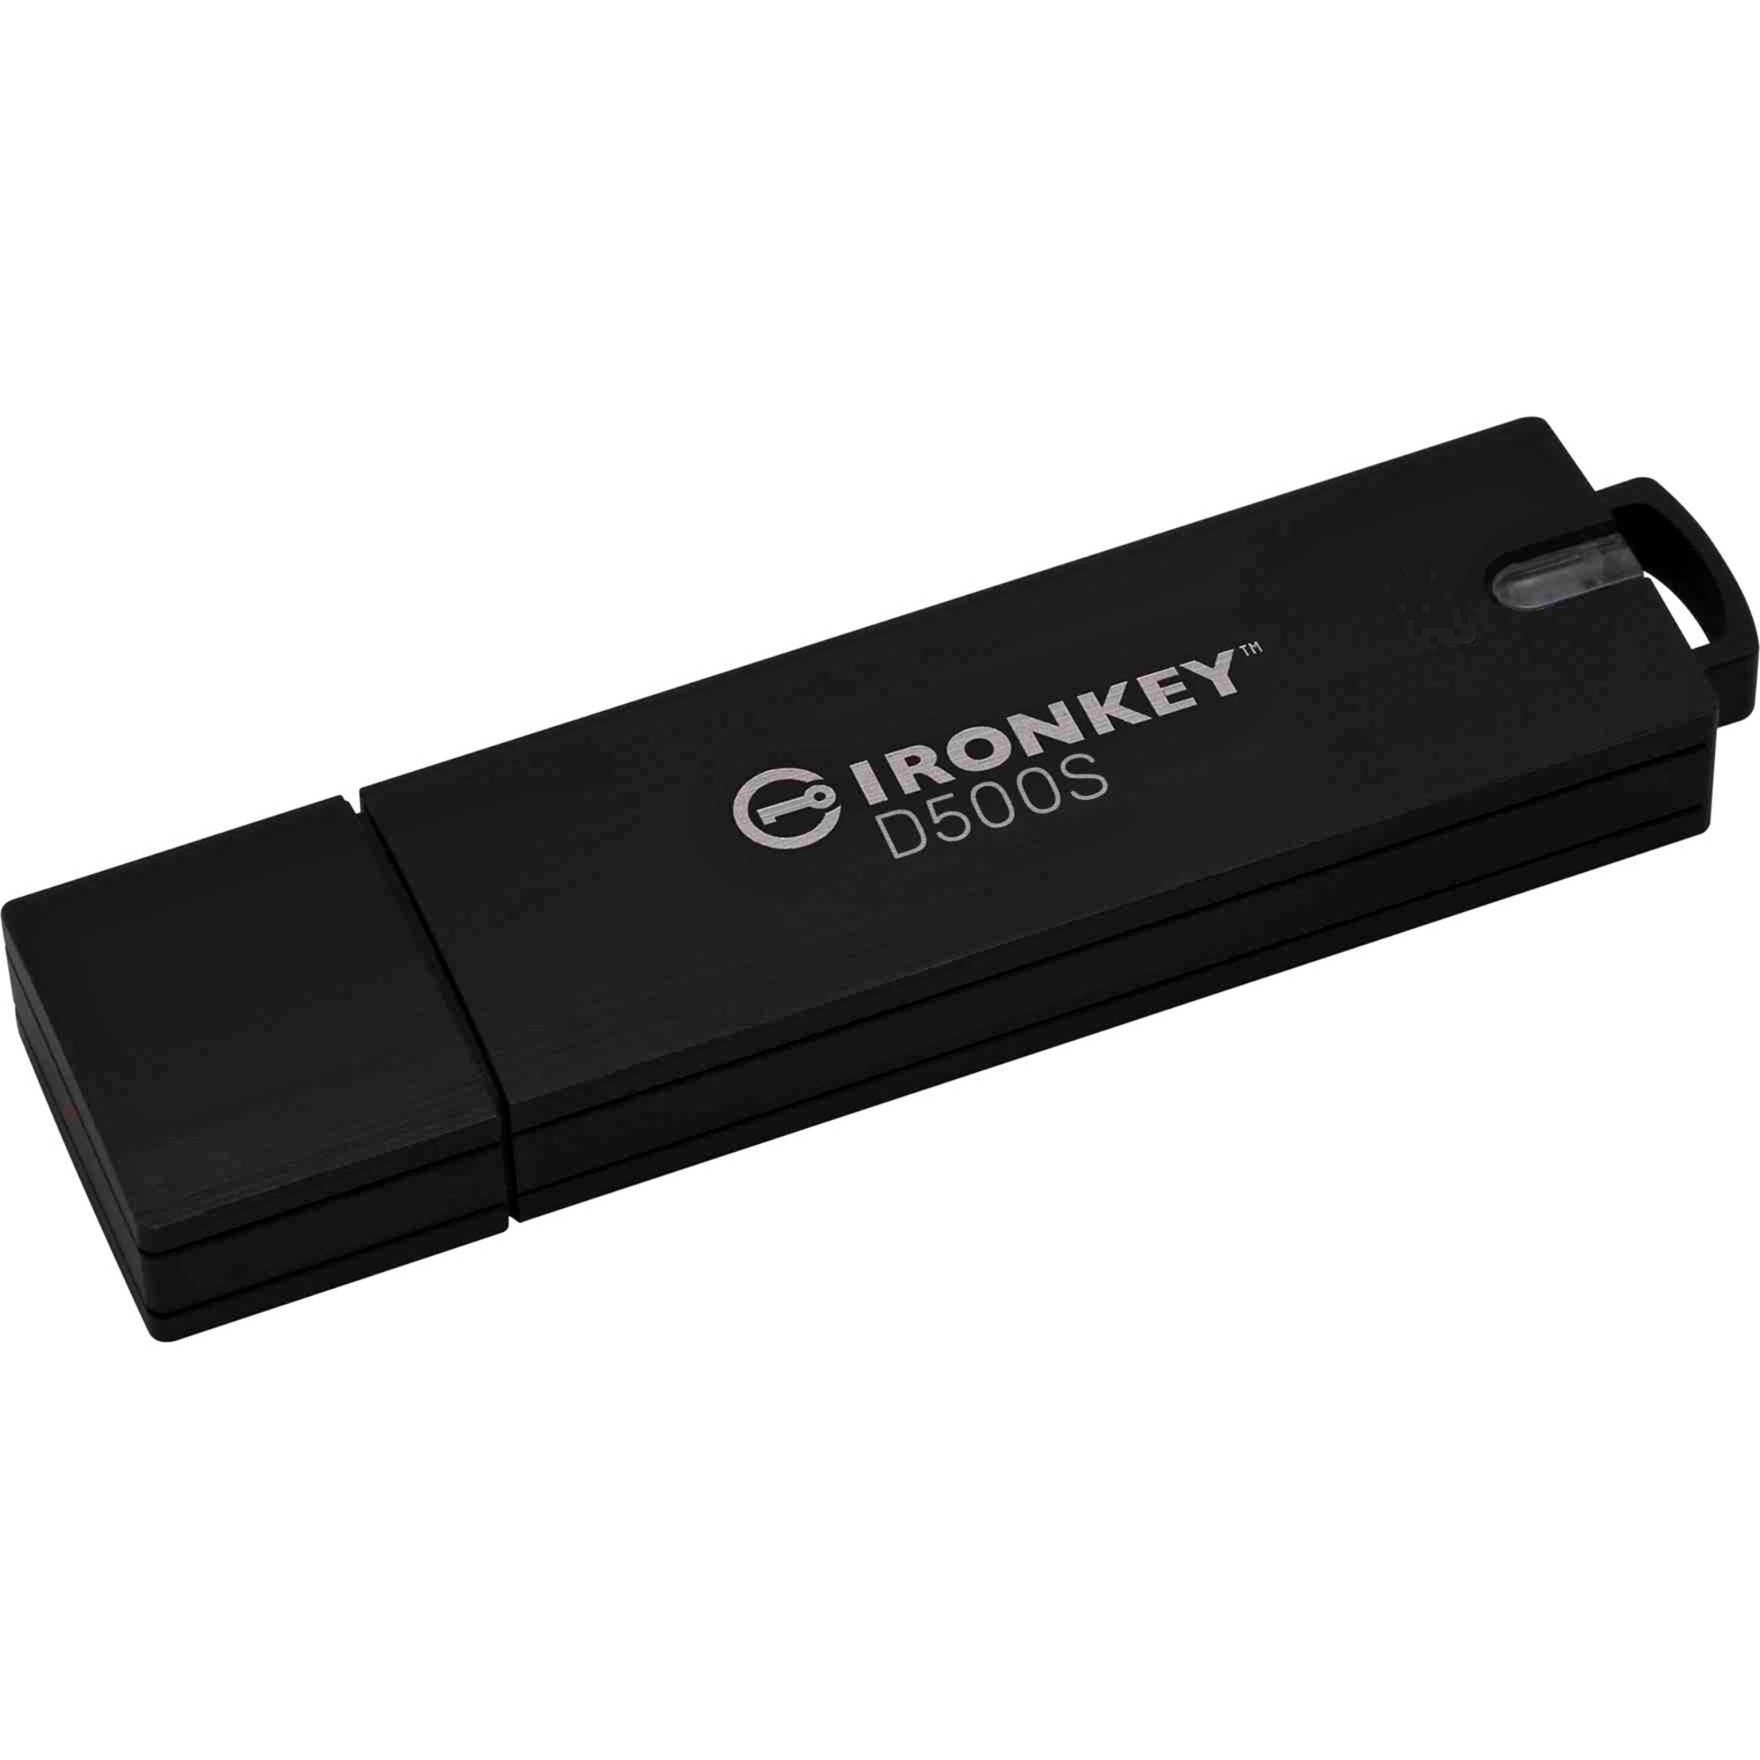 IronKey D500S 16 GB, USB-Stick von Kingston